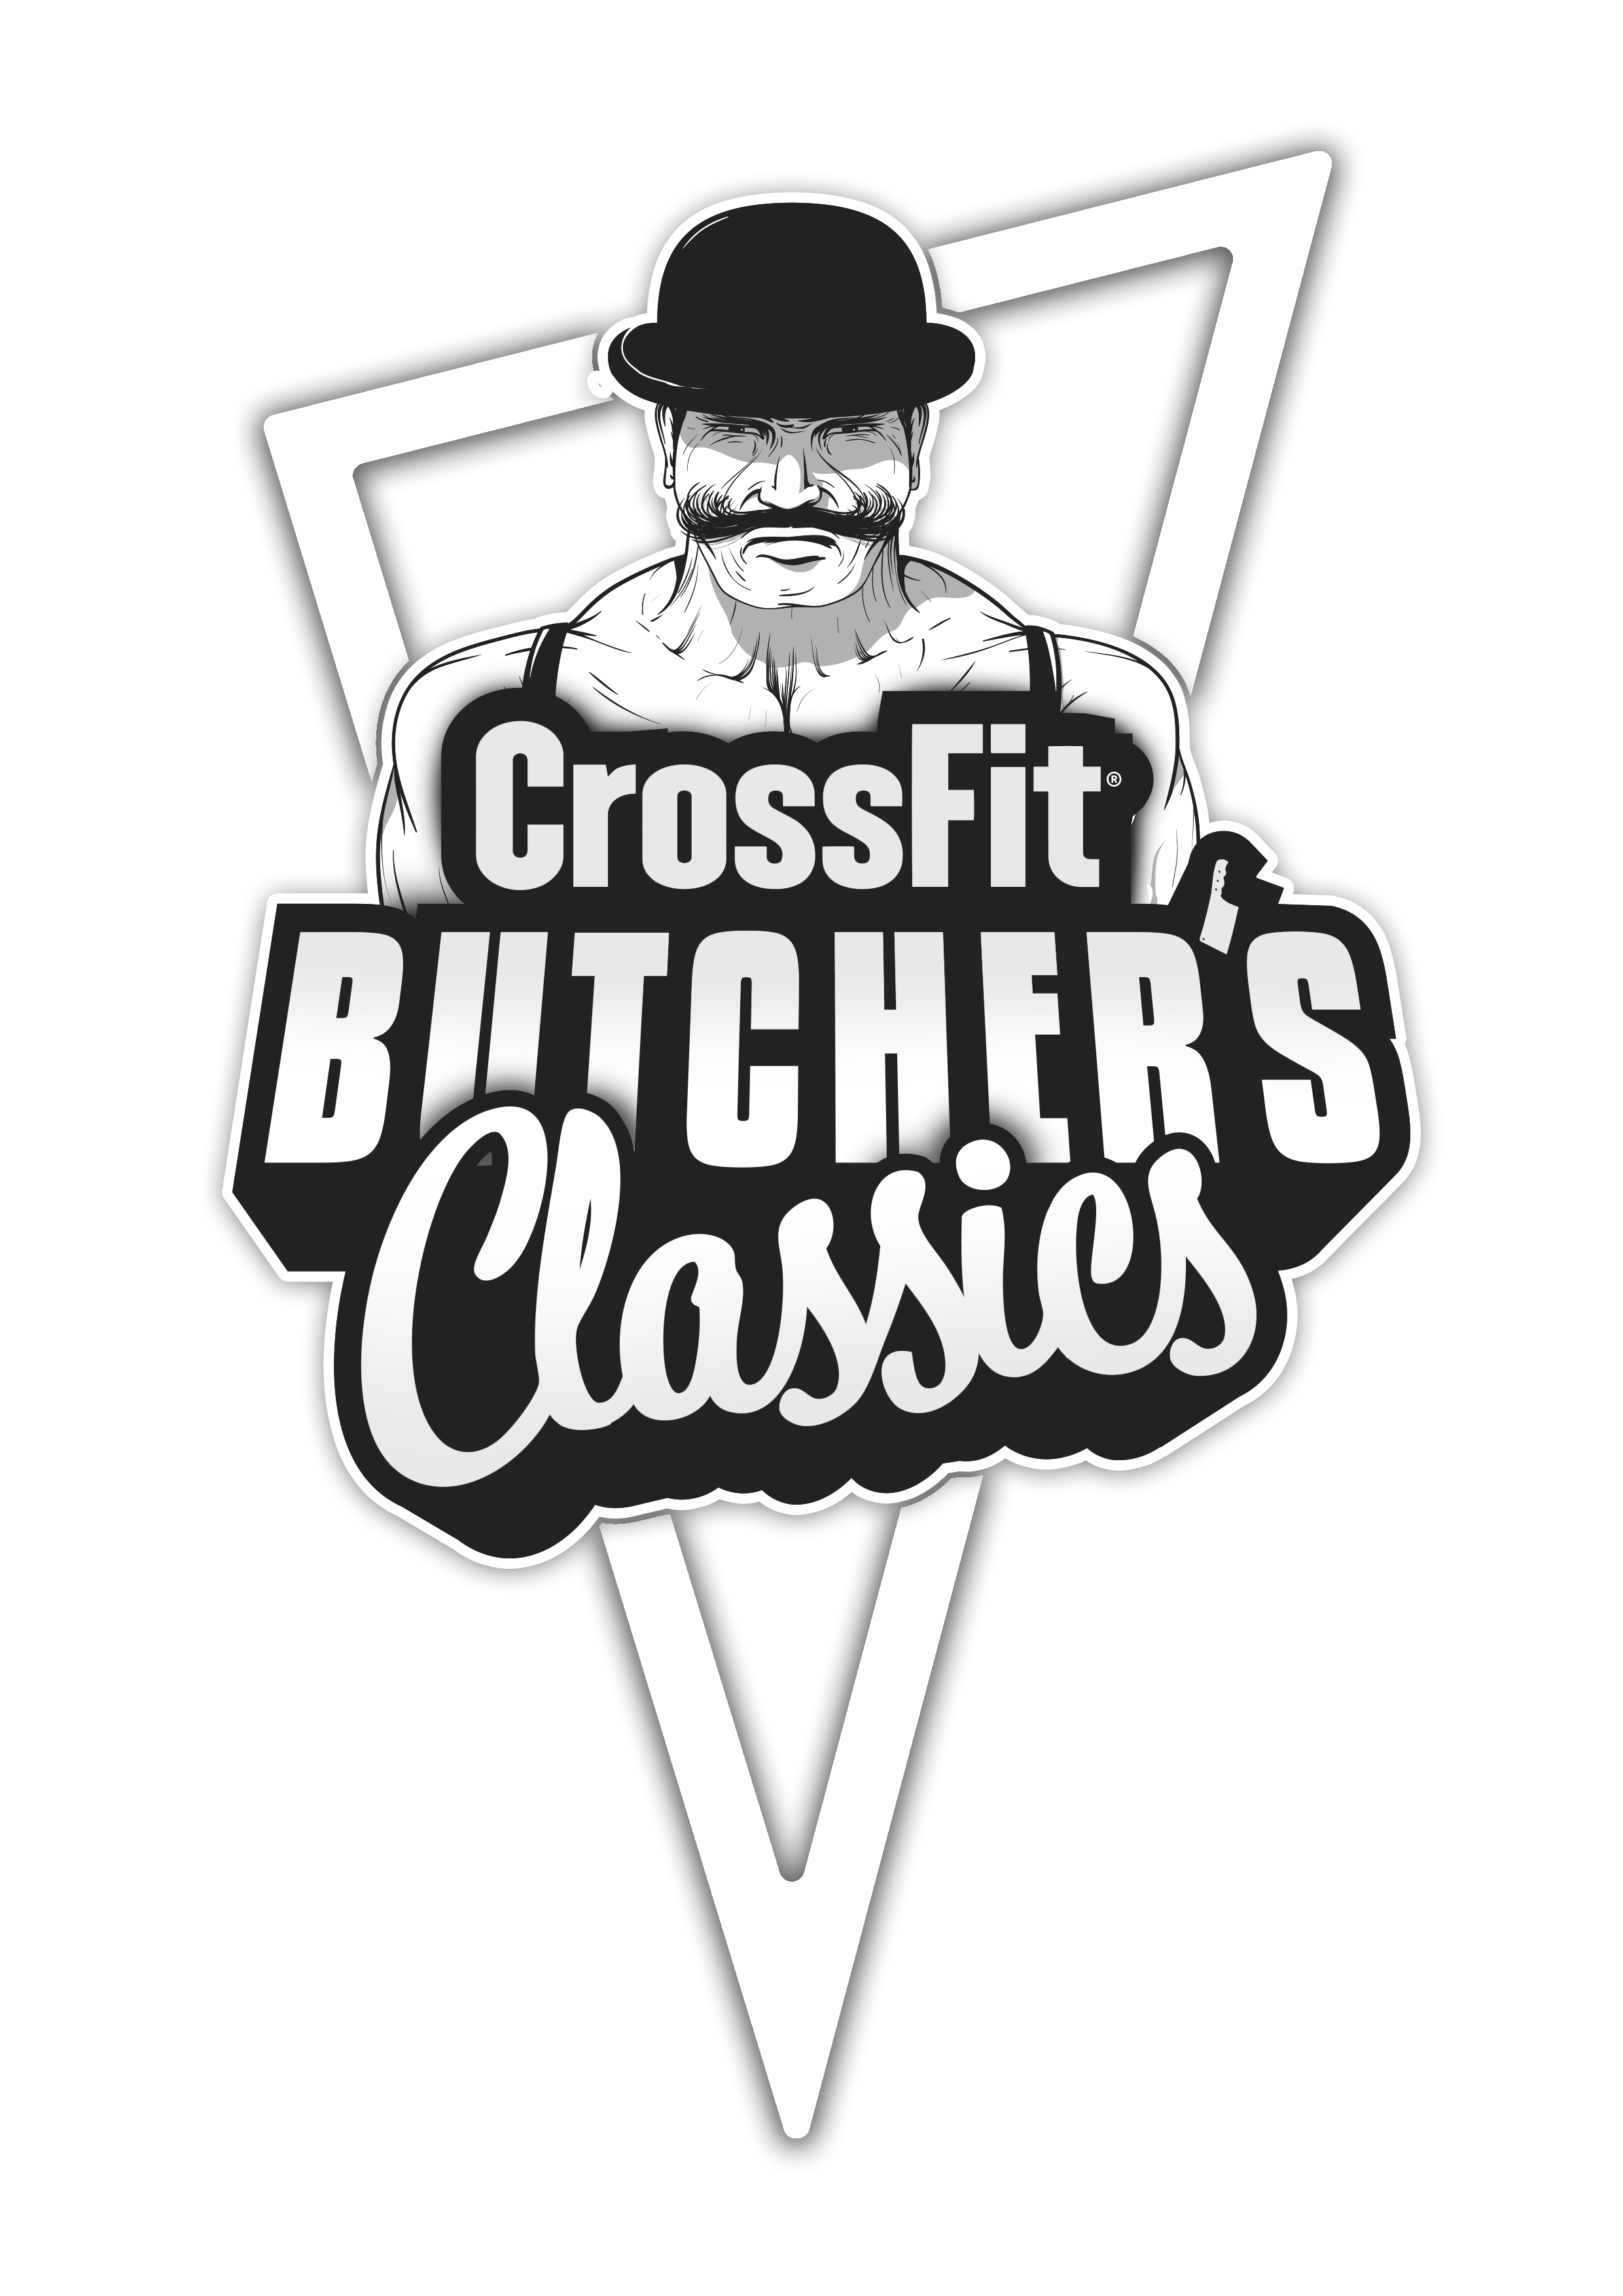 CrossFit® Butchers